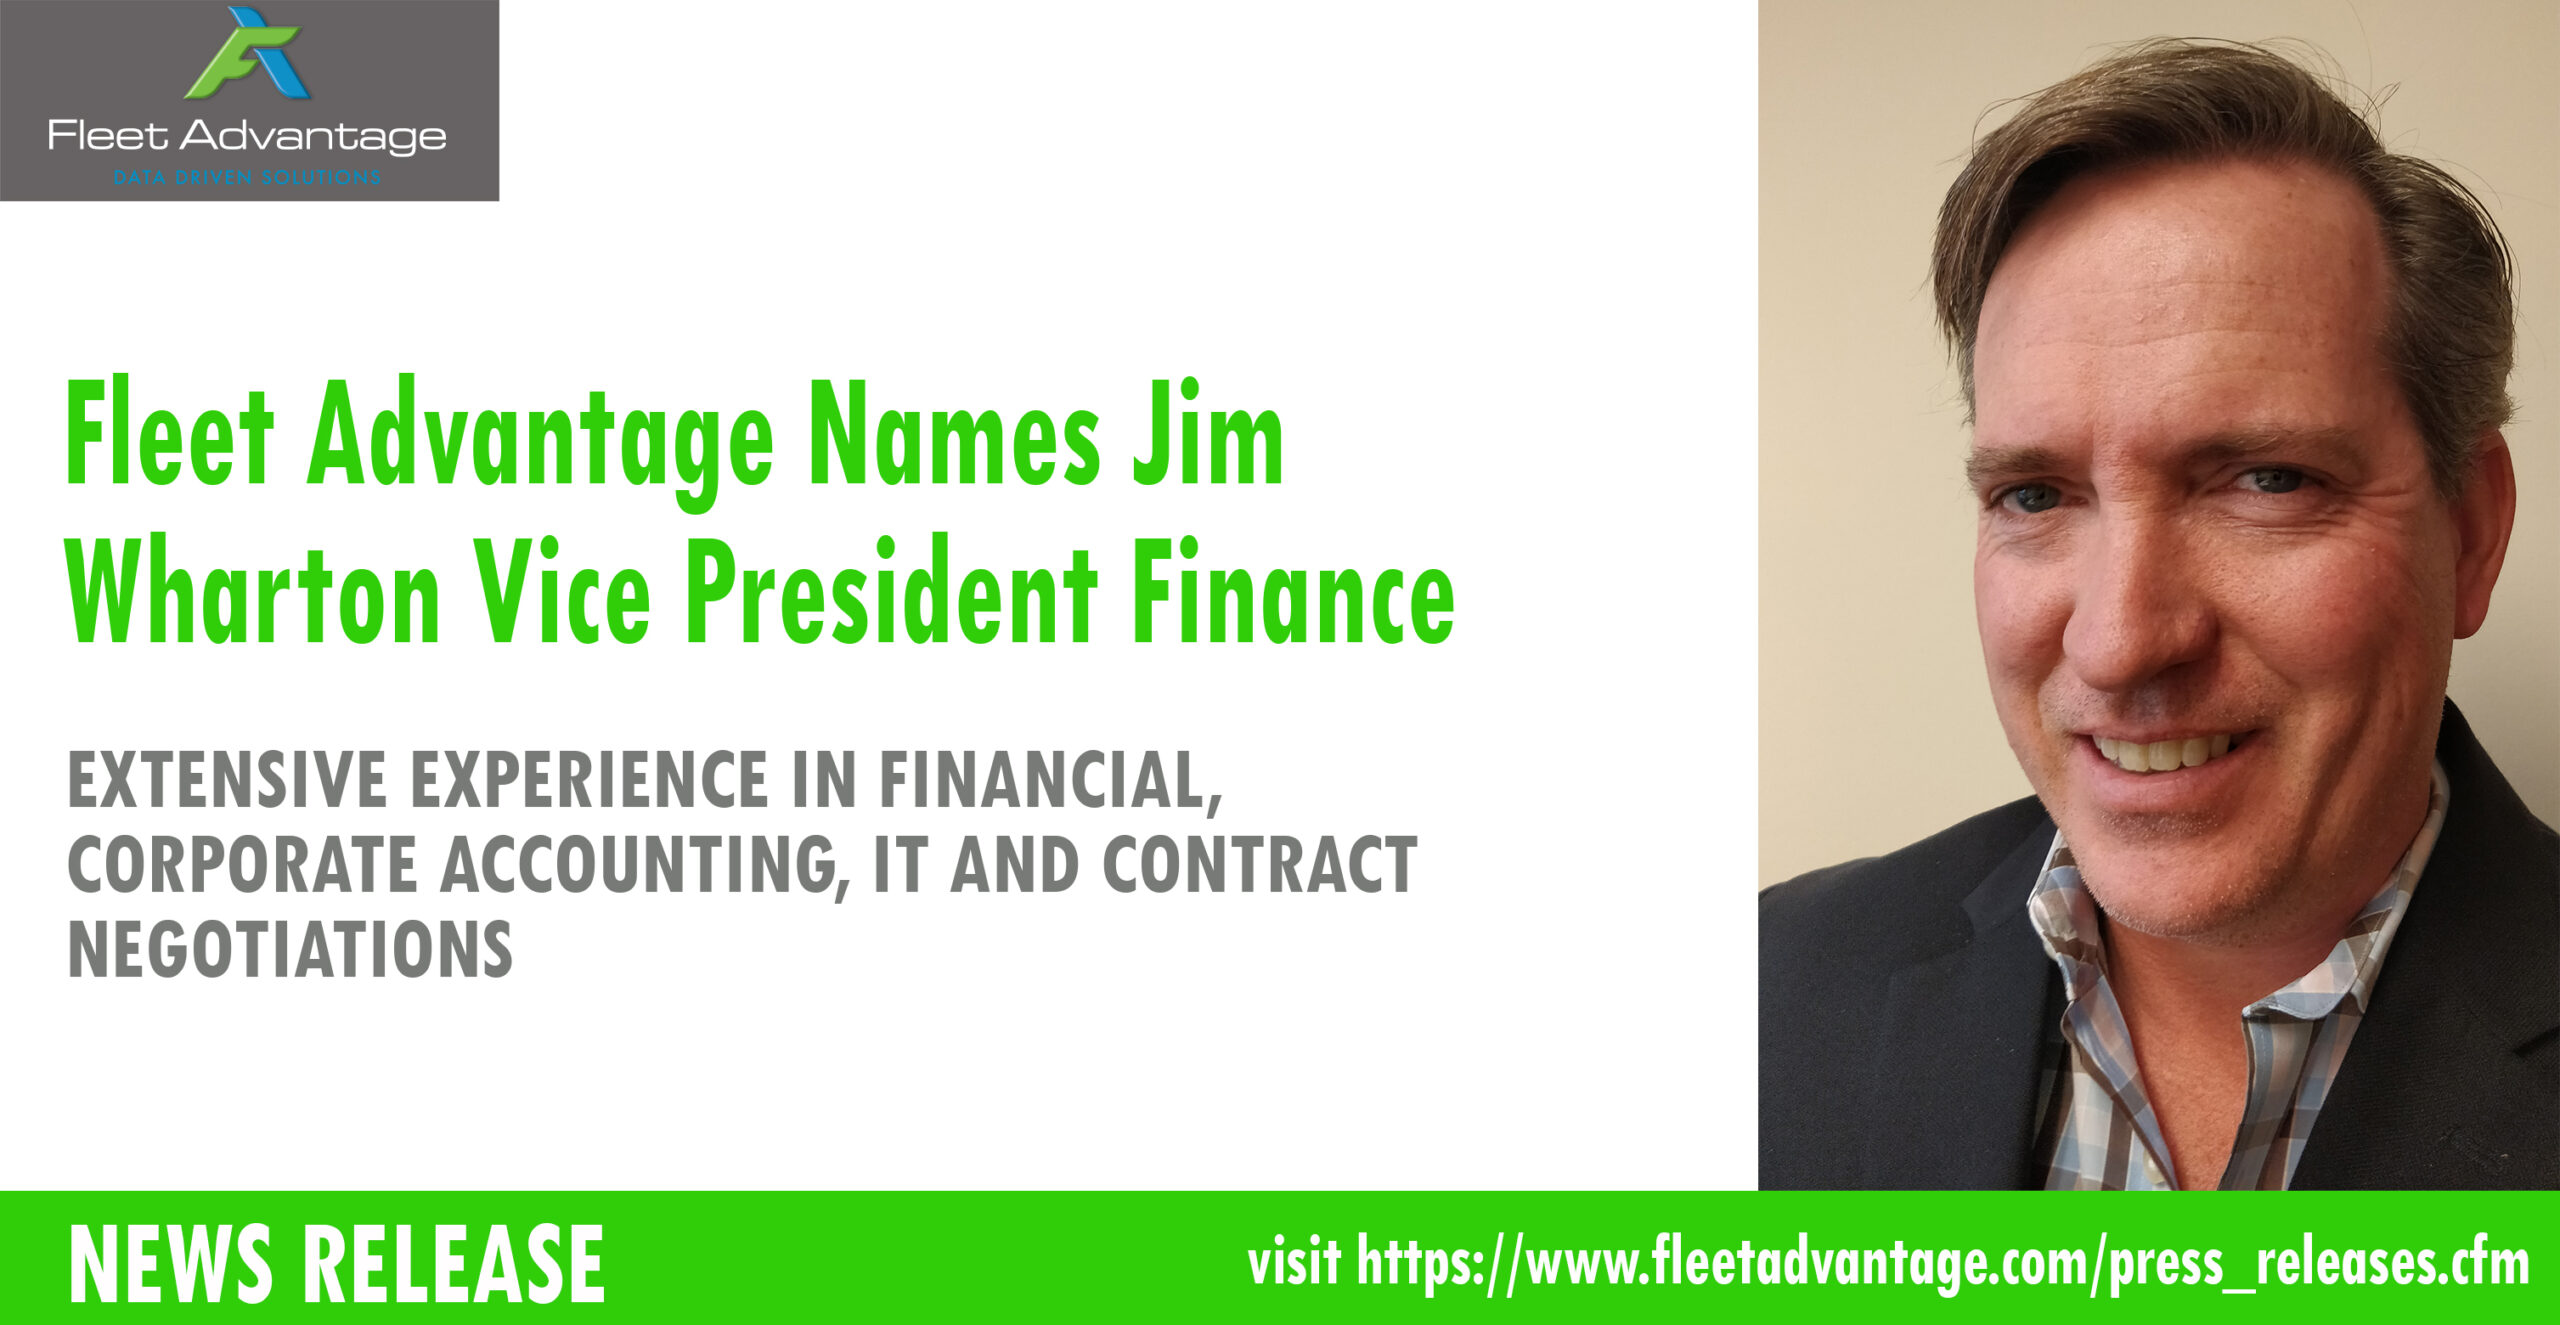 Fleet Advantage Names Jim Wharton Vice President Finance